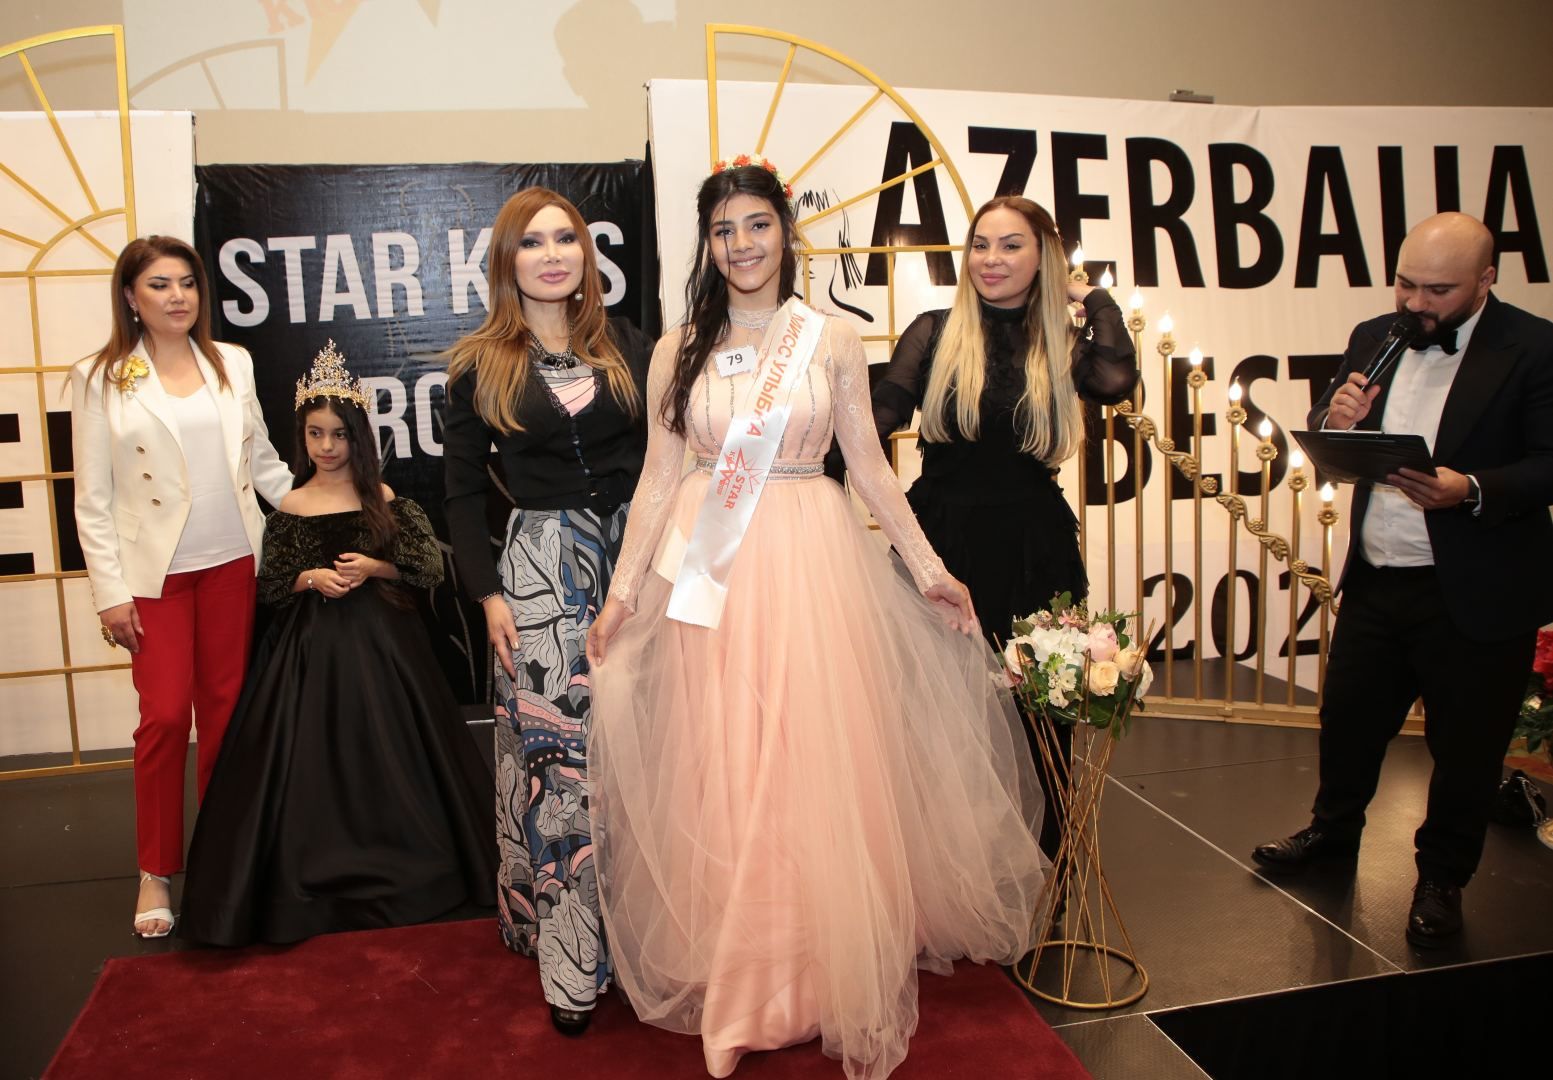 Baku hosts Azerbaijan Kids Best Model 2023 [PHOTOS] - Gallery Image